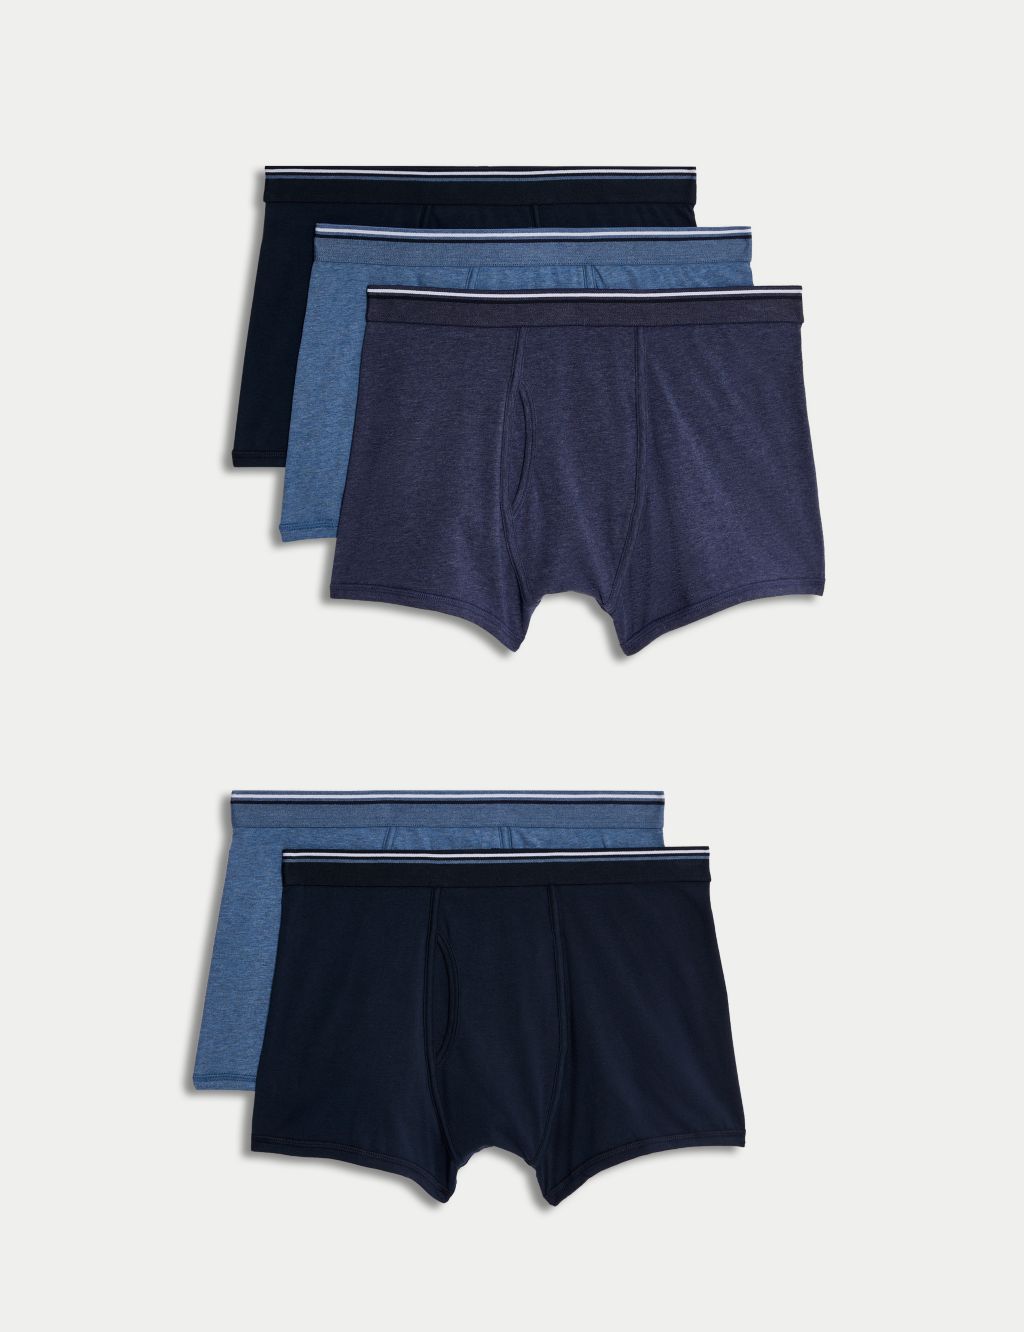 Stanfield's 2-Pack Mens Cotton Stretch Trunks Underwear, Sizes S-XL 